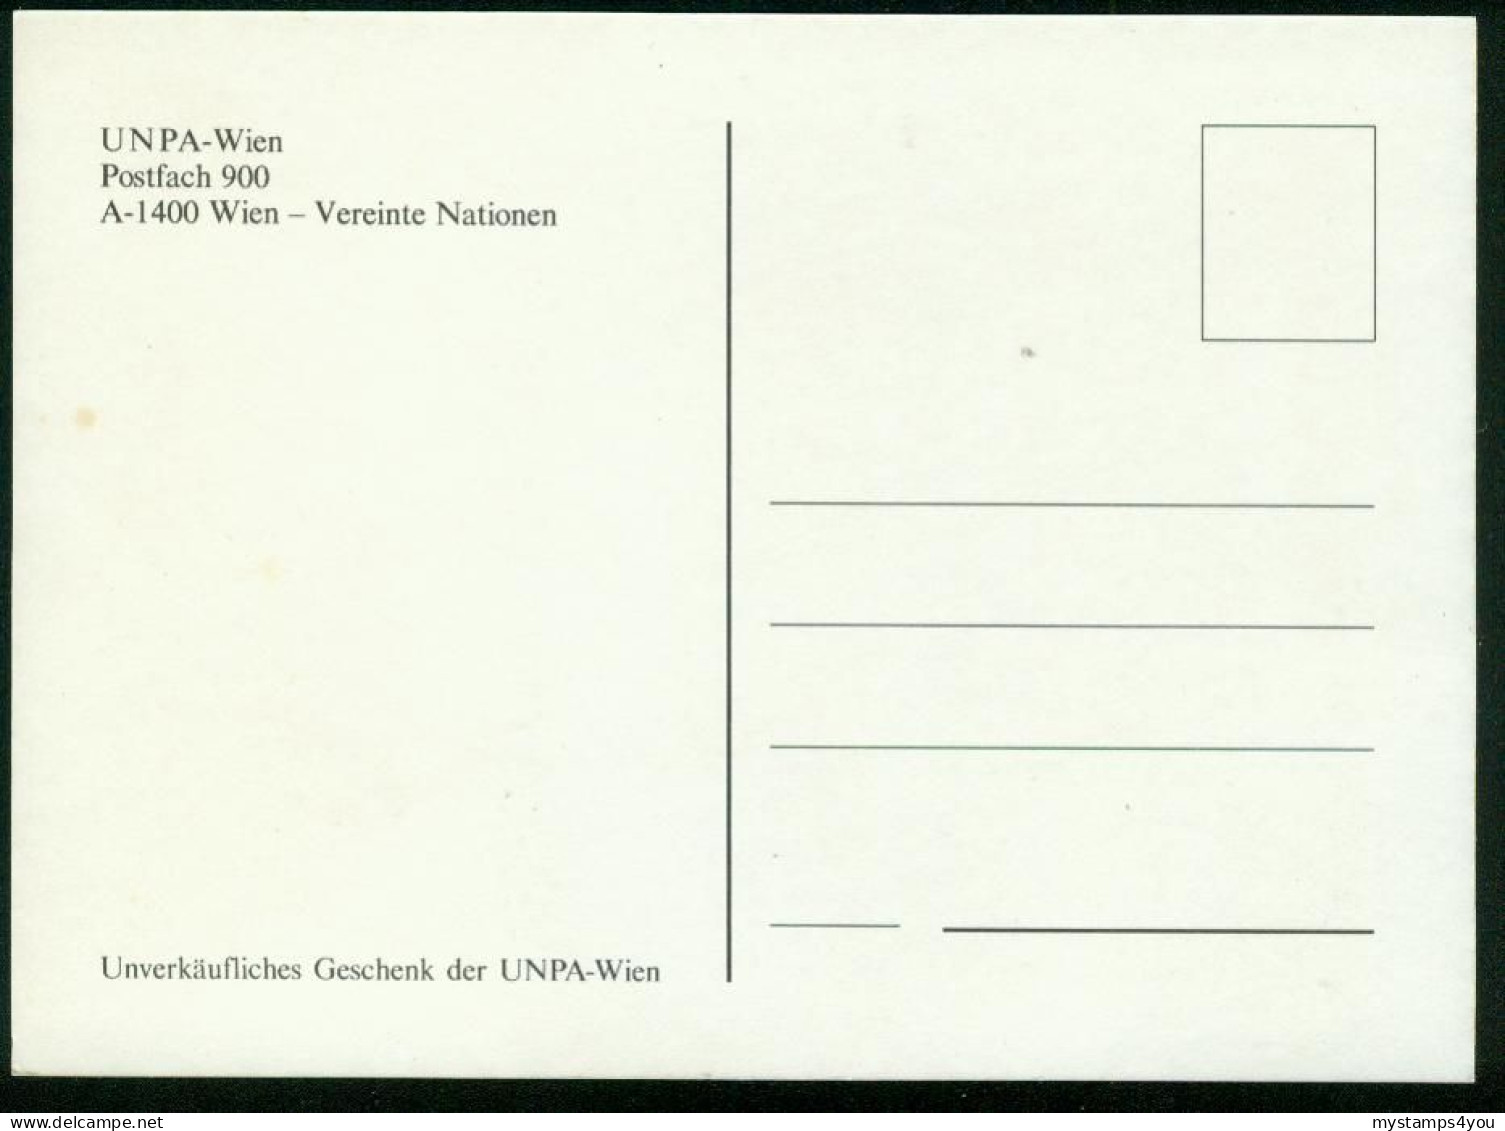 Mk UN New York (UNO) Maximum Card 1989 MiNr 578 | Tenth Anniv Of United Nations Vienna International Centre #max-0078 - Cartes-maximum